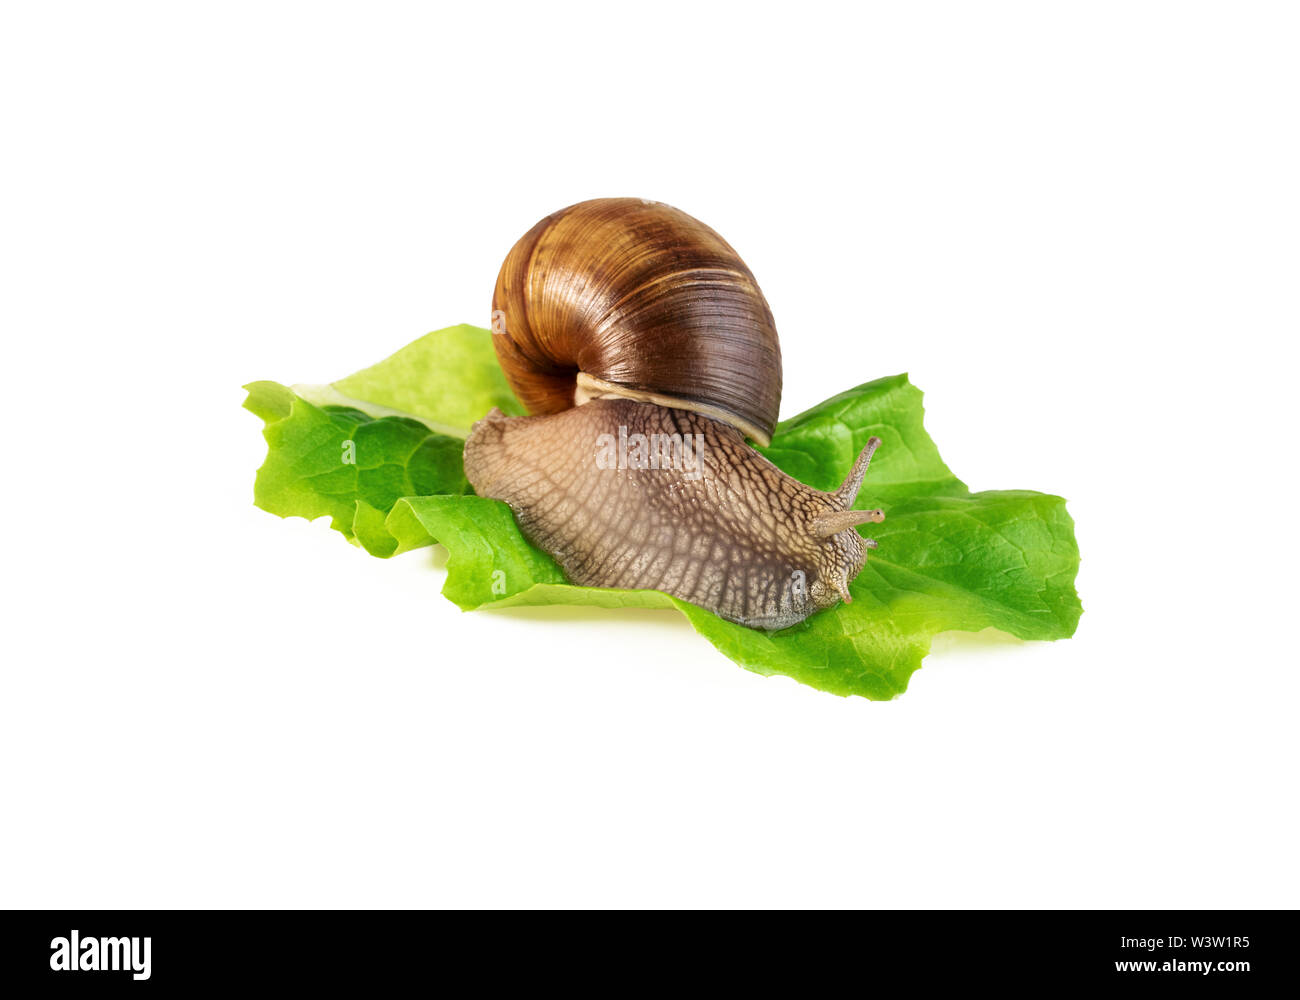 Snail on lettuce leaf snail control of garden pests Stock Photo